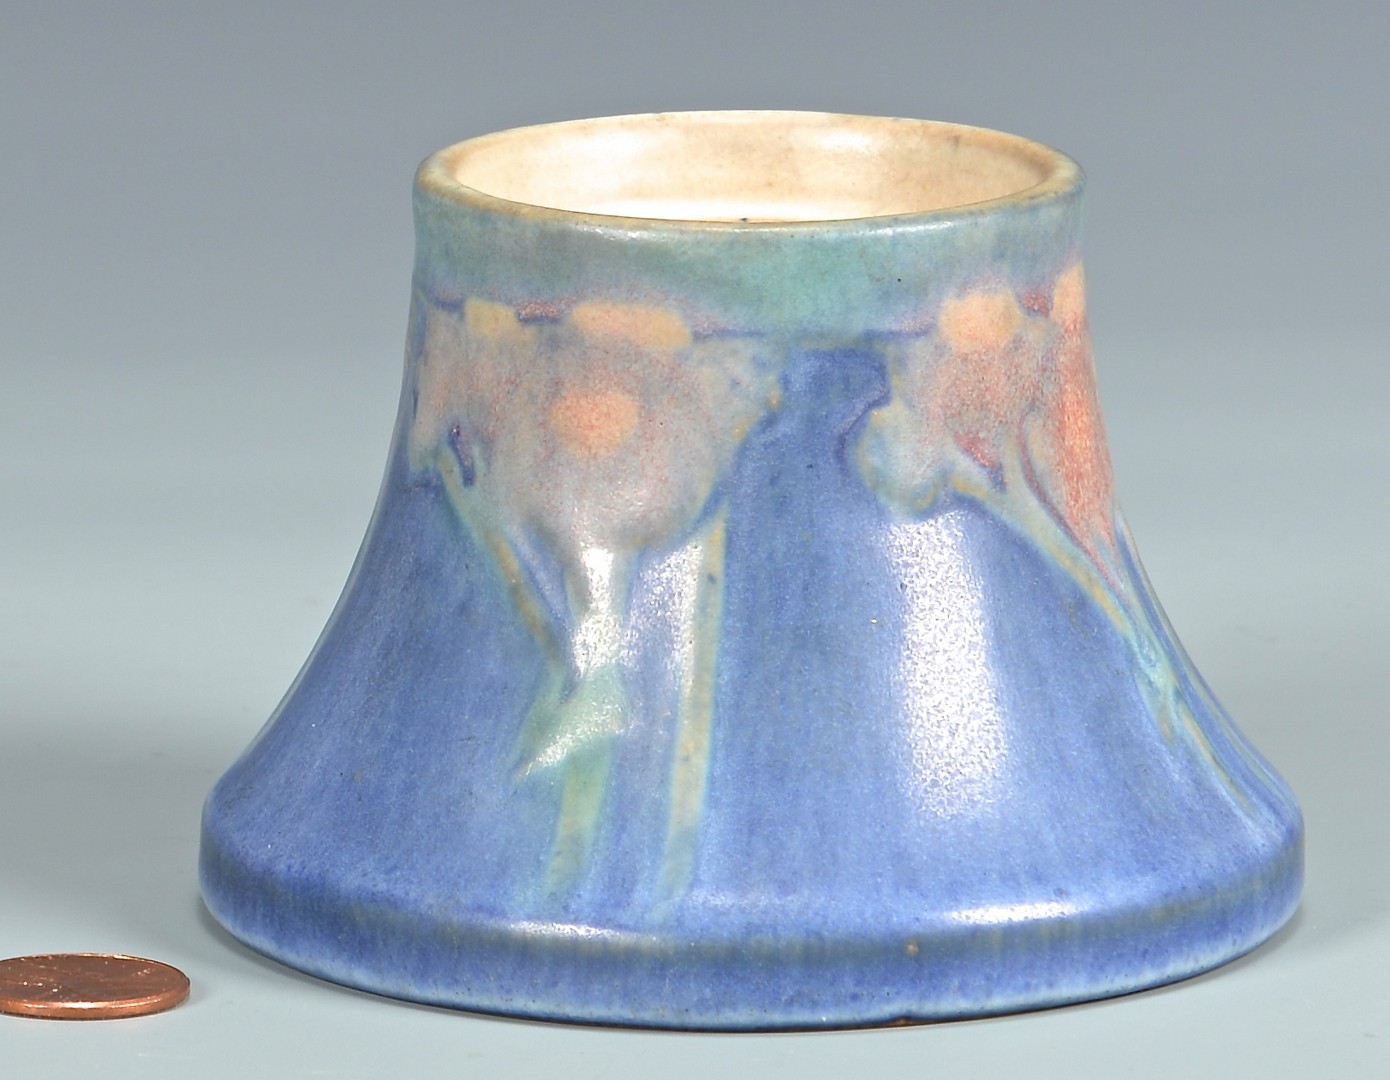 Lot 463: 2 Joseph F. Meyer Newcomb Pottery Items